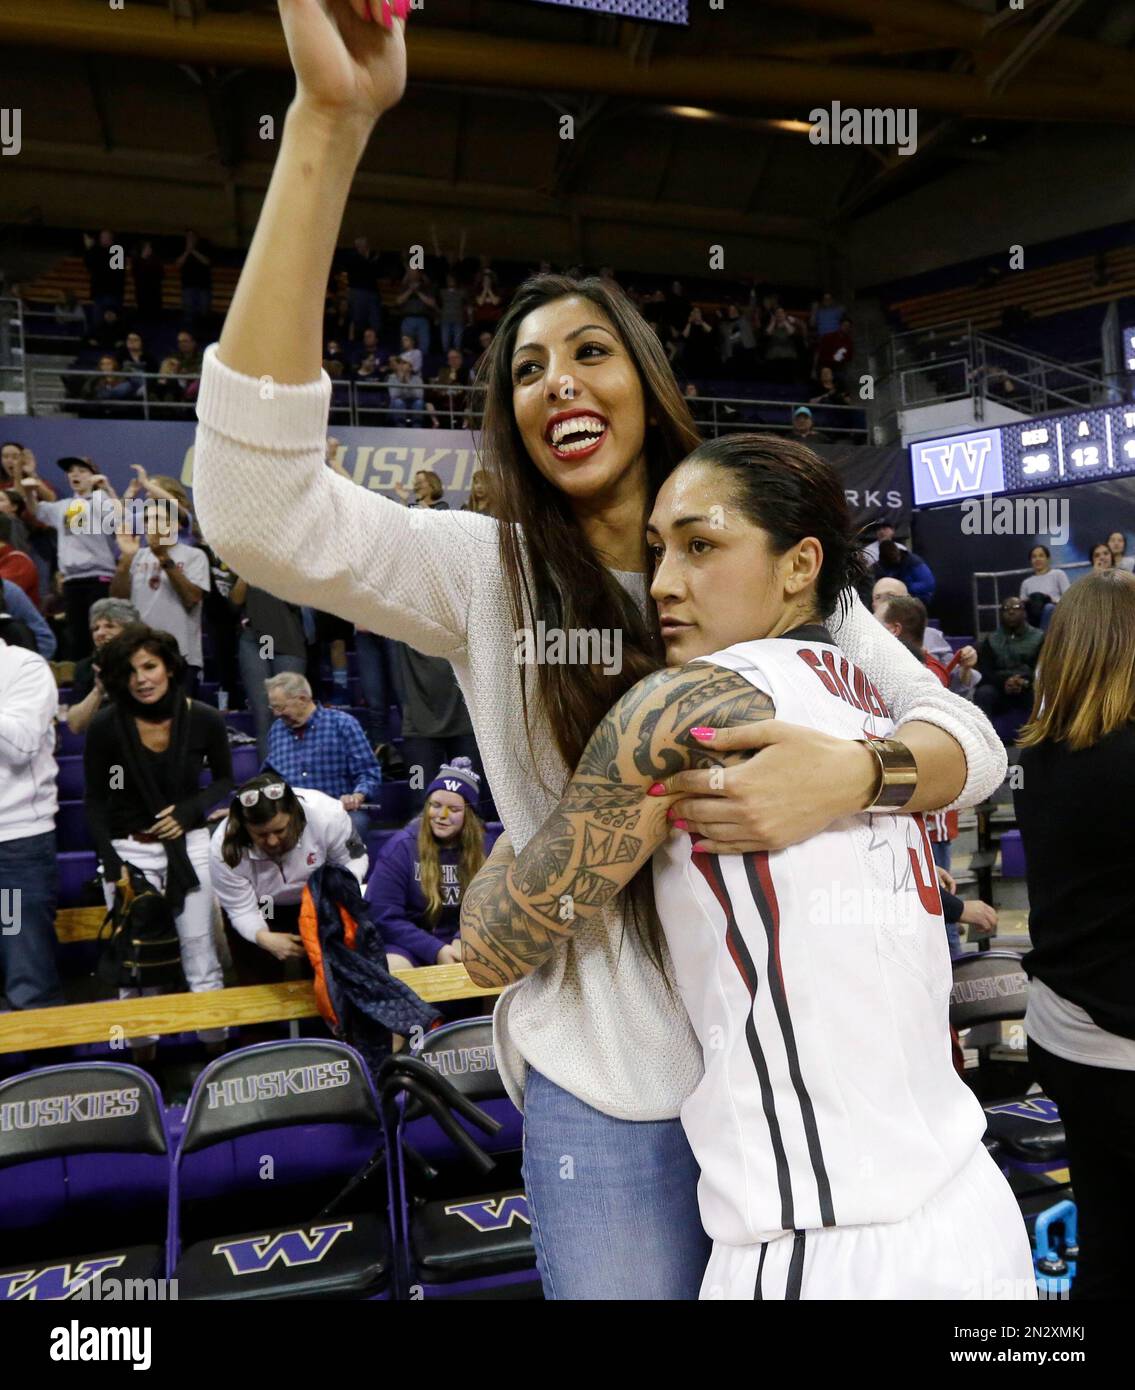 Washington State's Lia Galdeira, right, embraces teammate Shalie ...